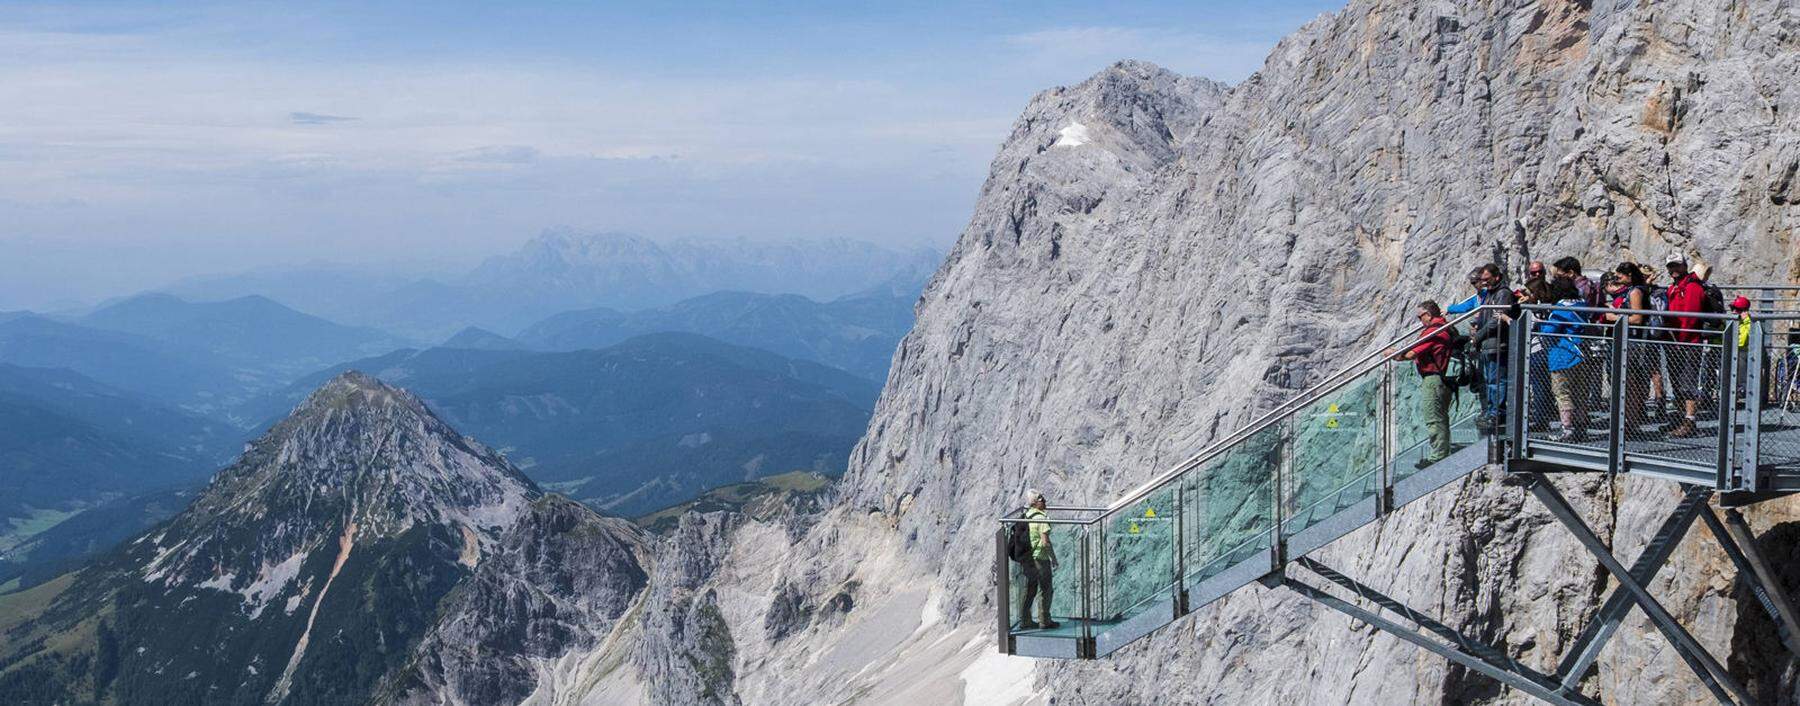 The Path To Nothingness on the Hoher Dachstein in Austria PUBLICATIONxINxGERxSUIxAUTxONLY Copyright